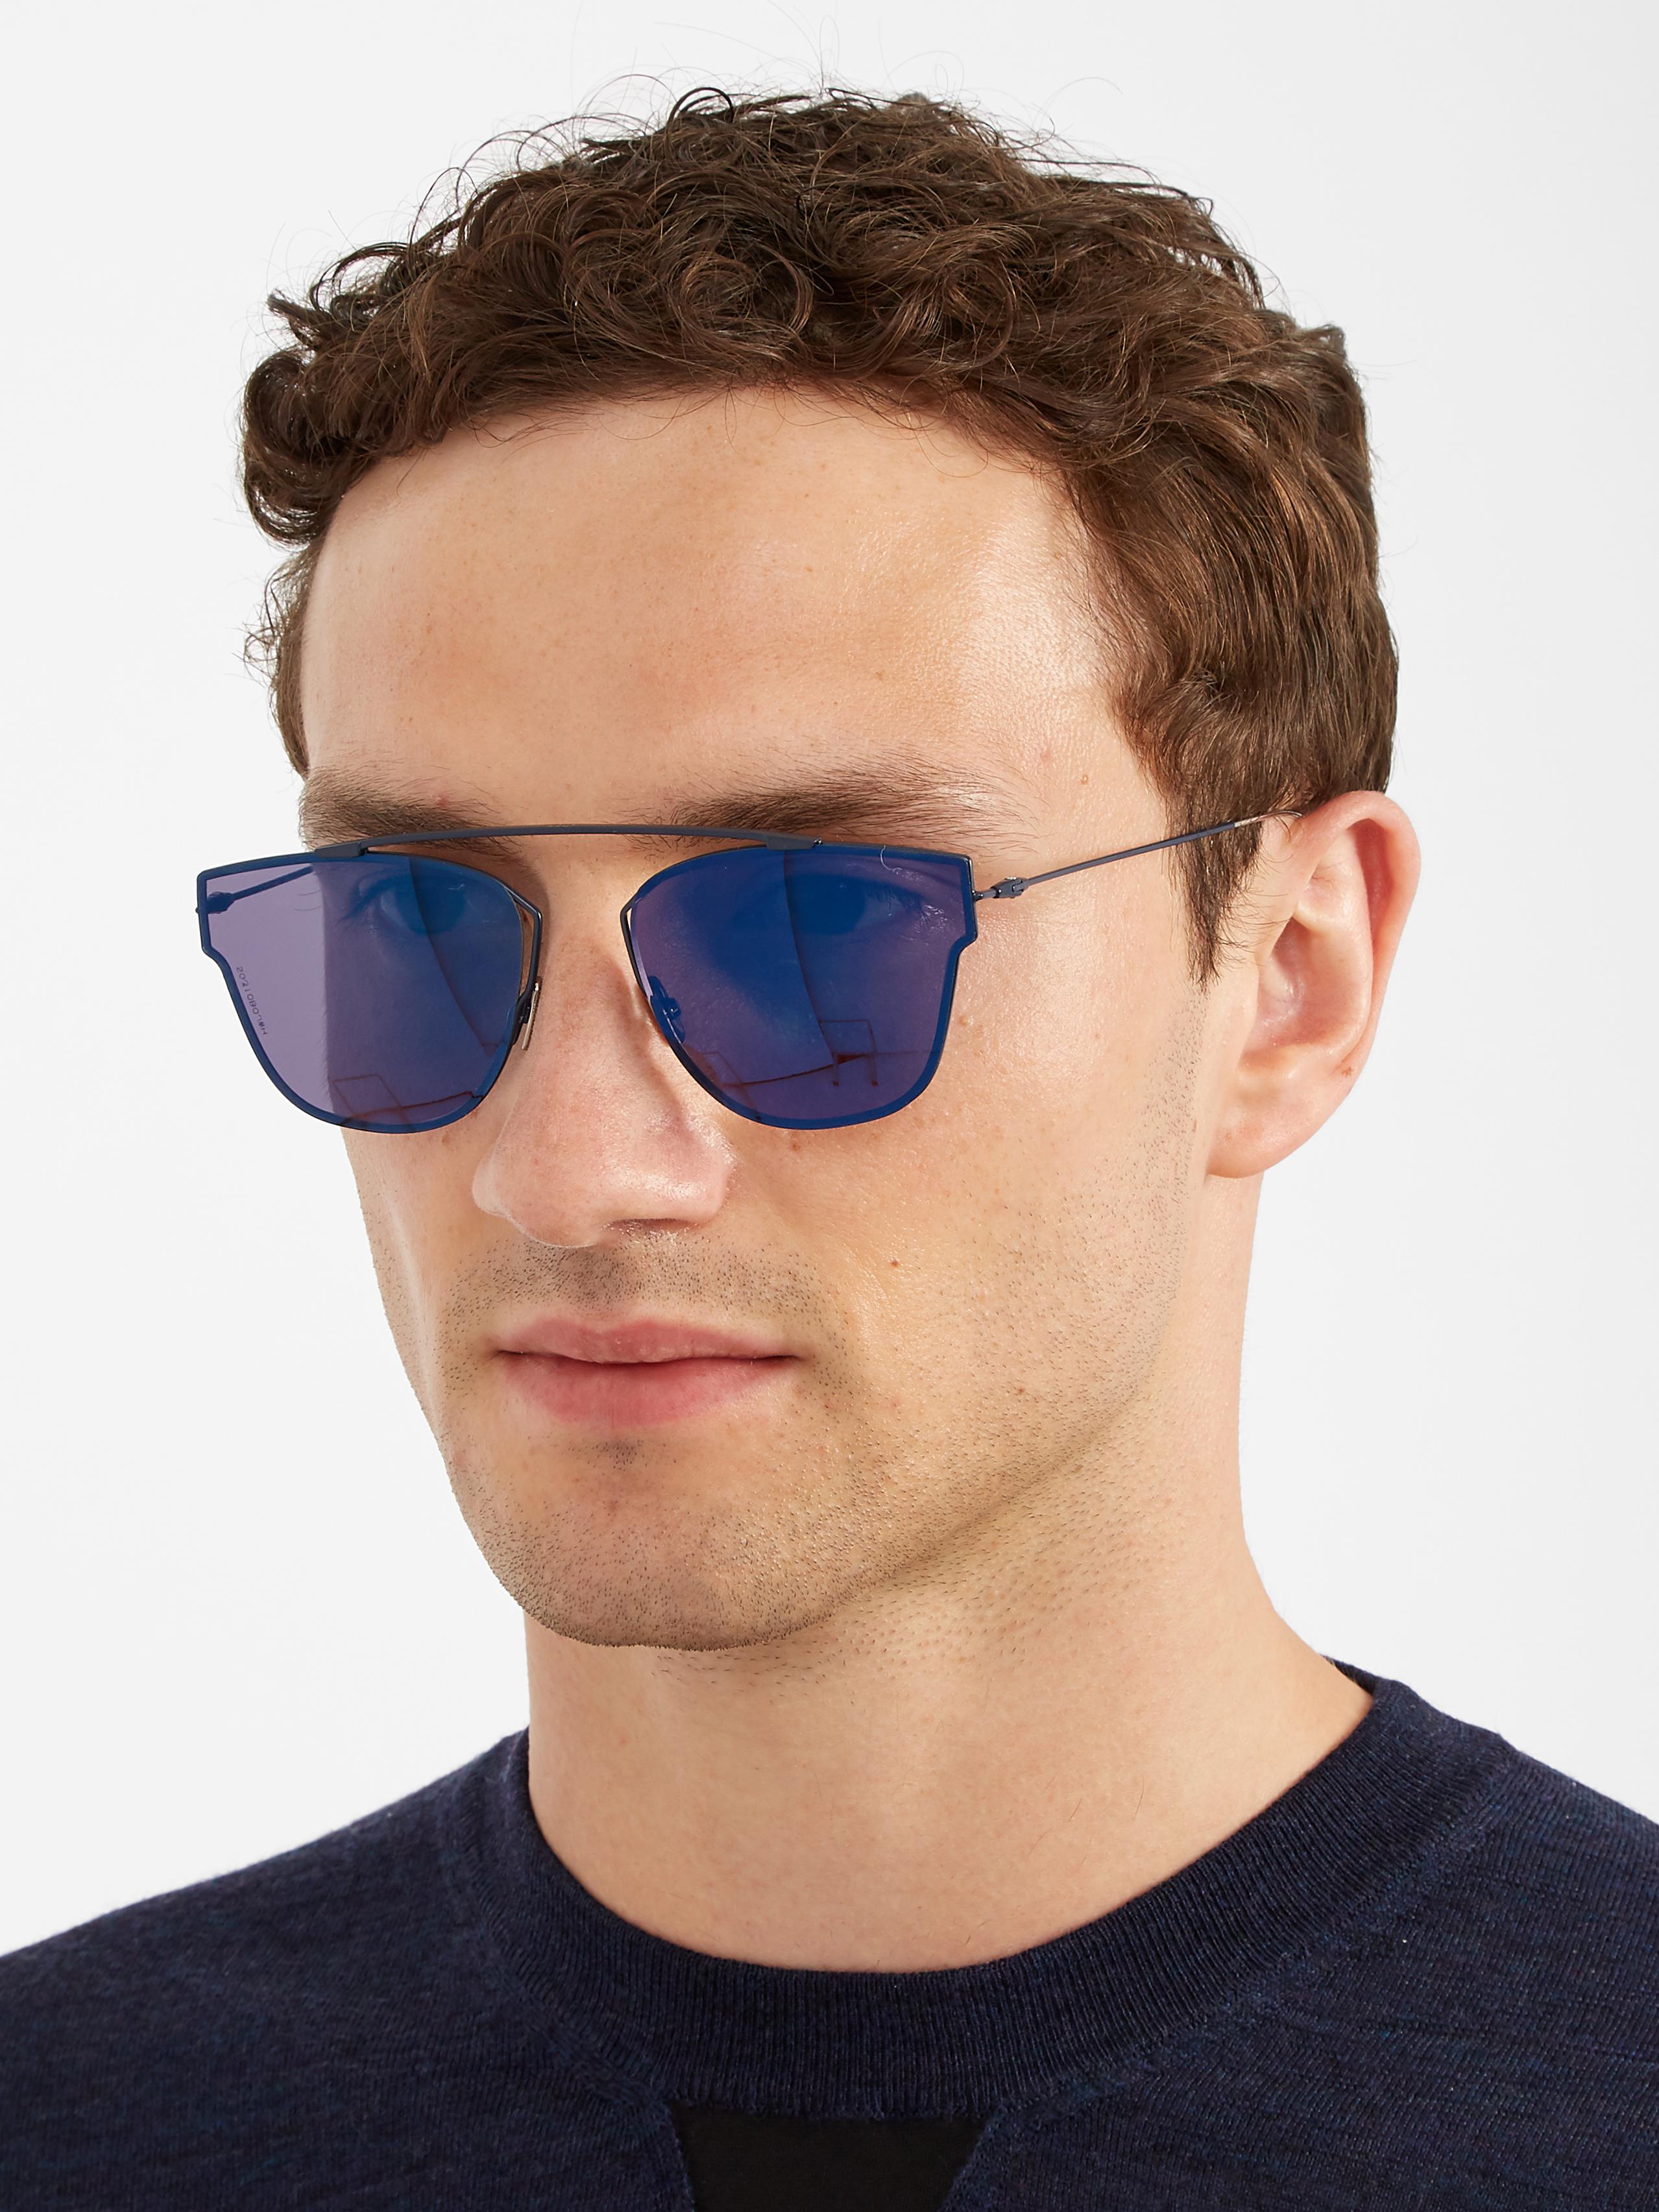 dior men's aviator sunglasses